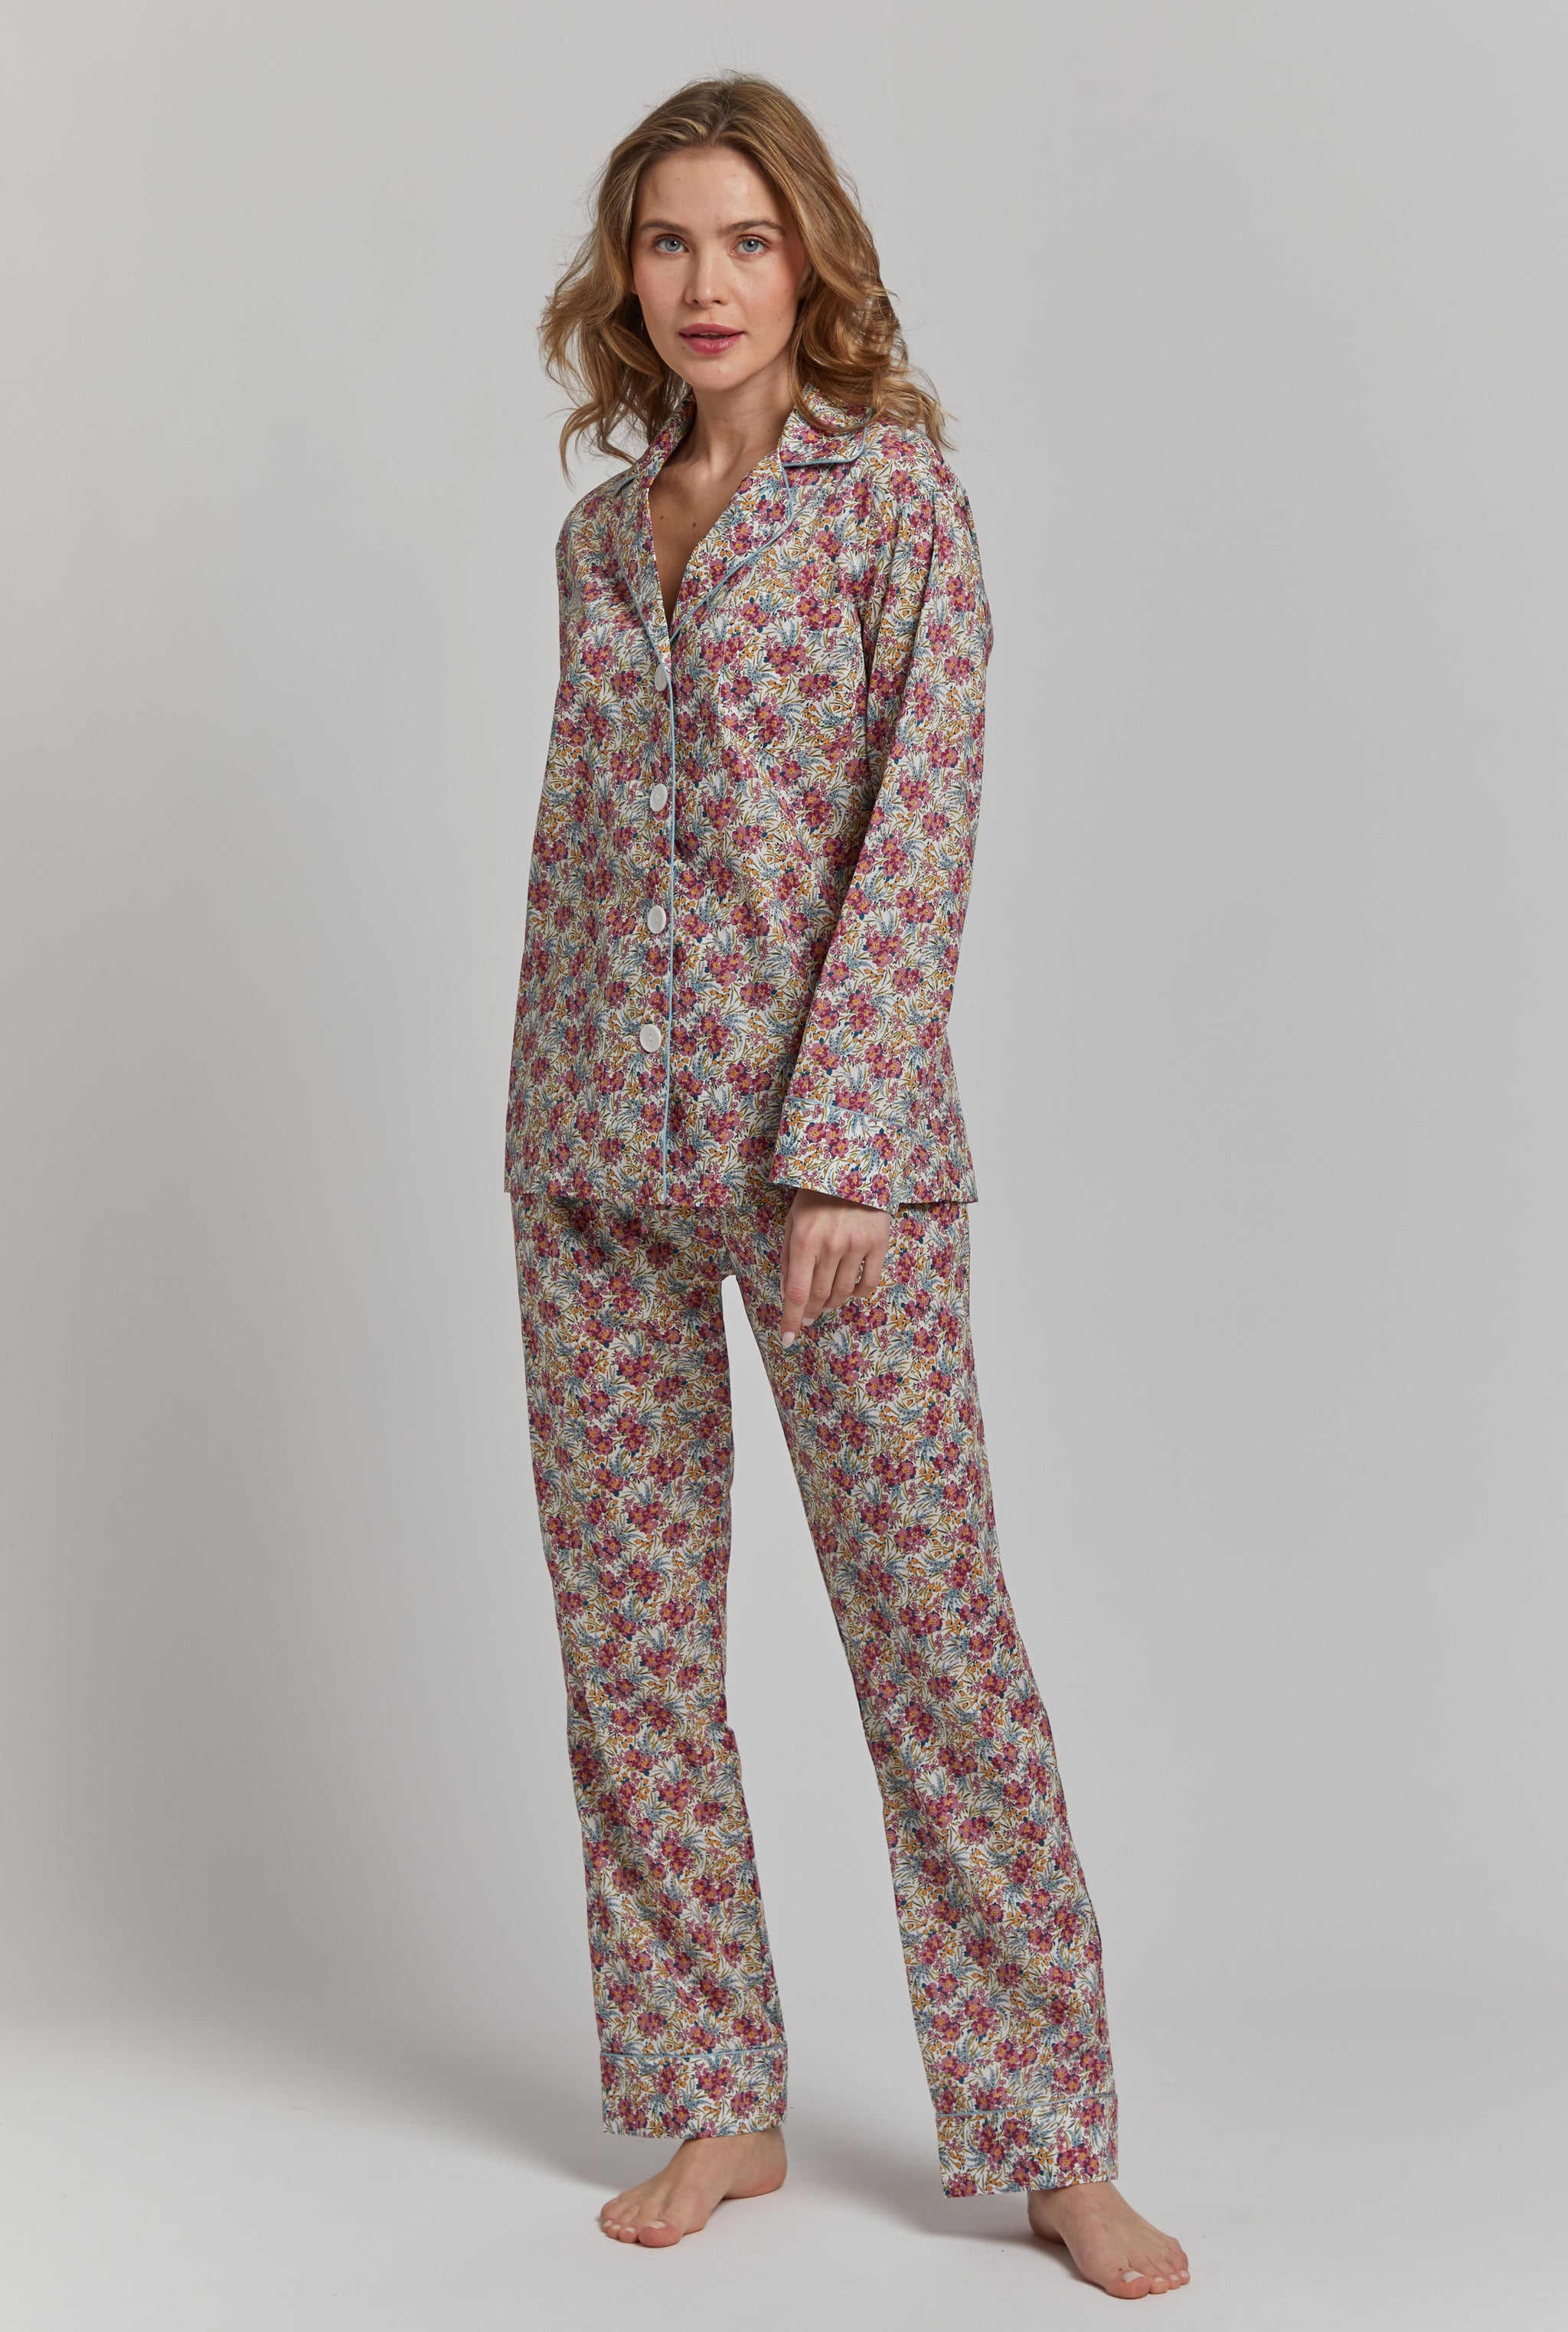 Pima Cotton Women's Pajamas, Super Soft & Cozy